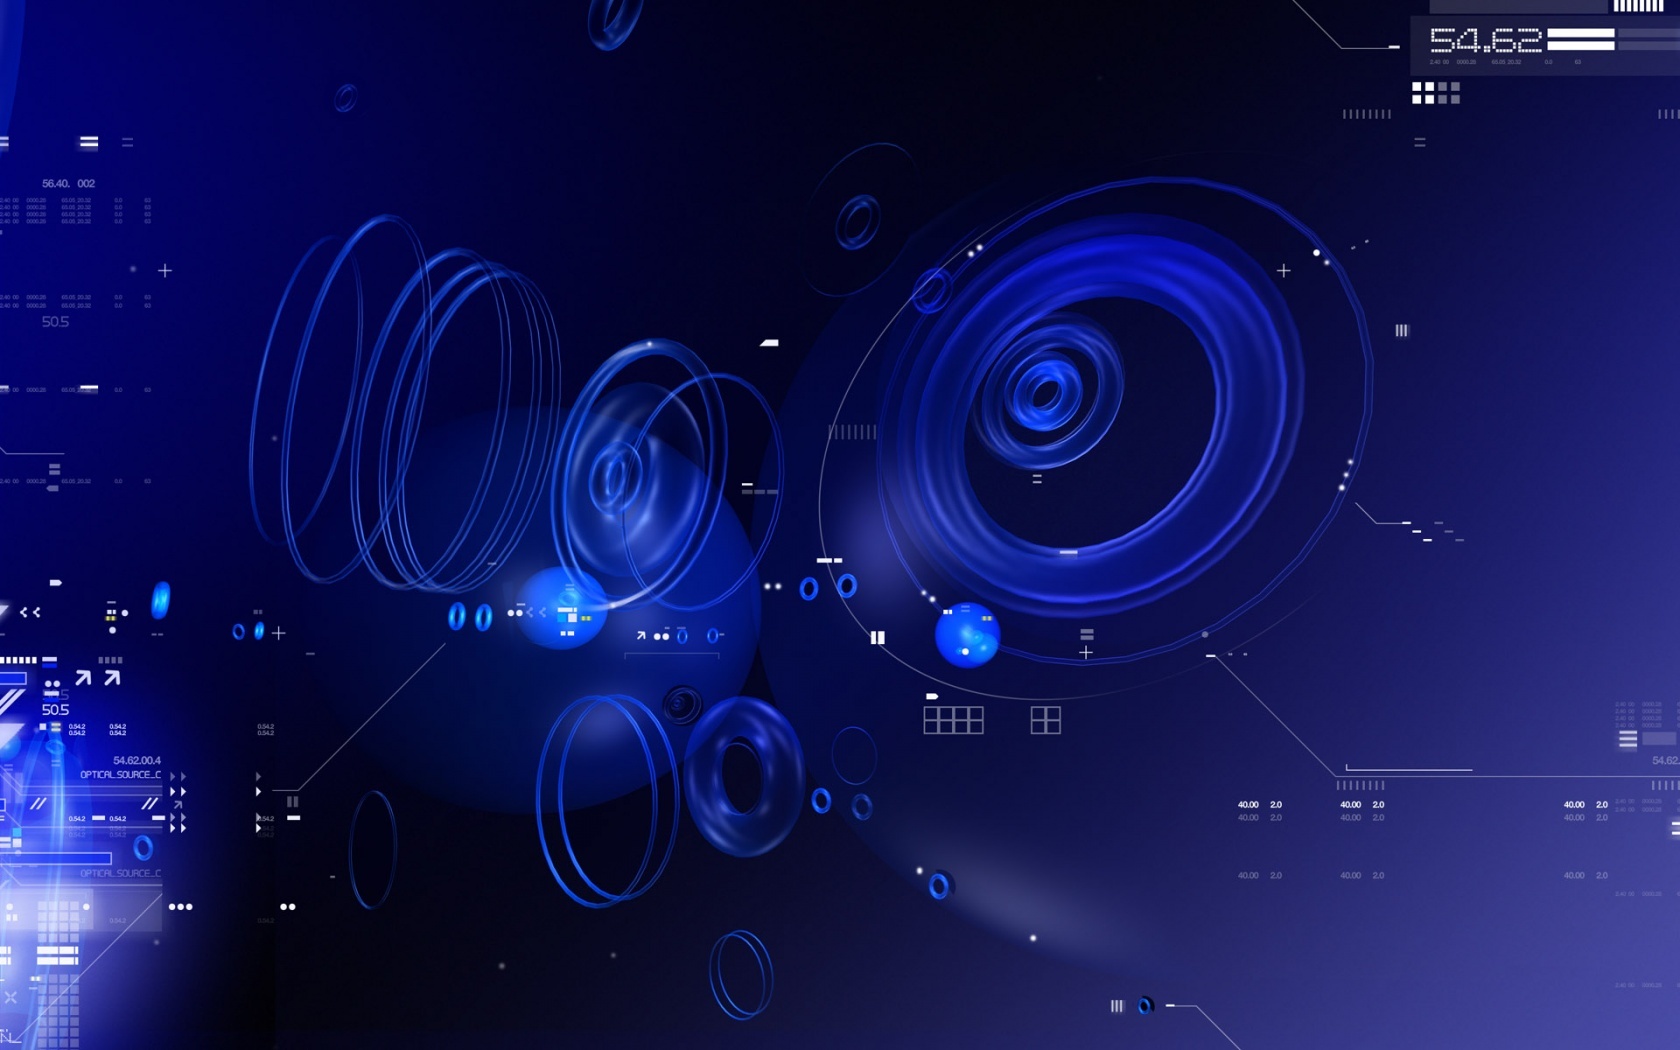 abstract wallpapers hd blue tech circles